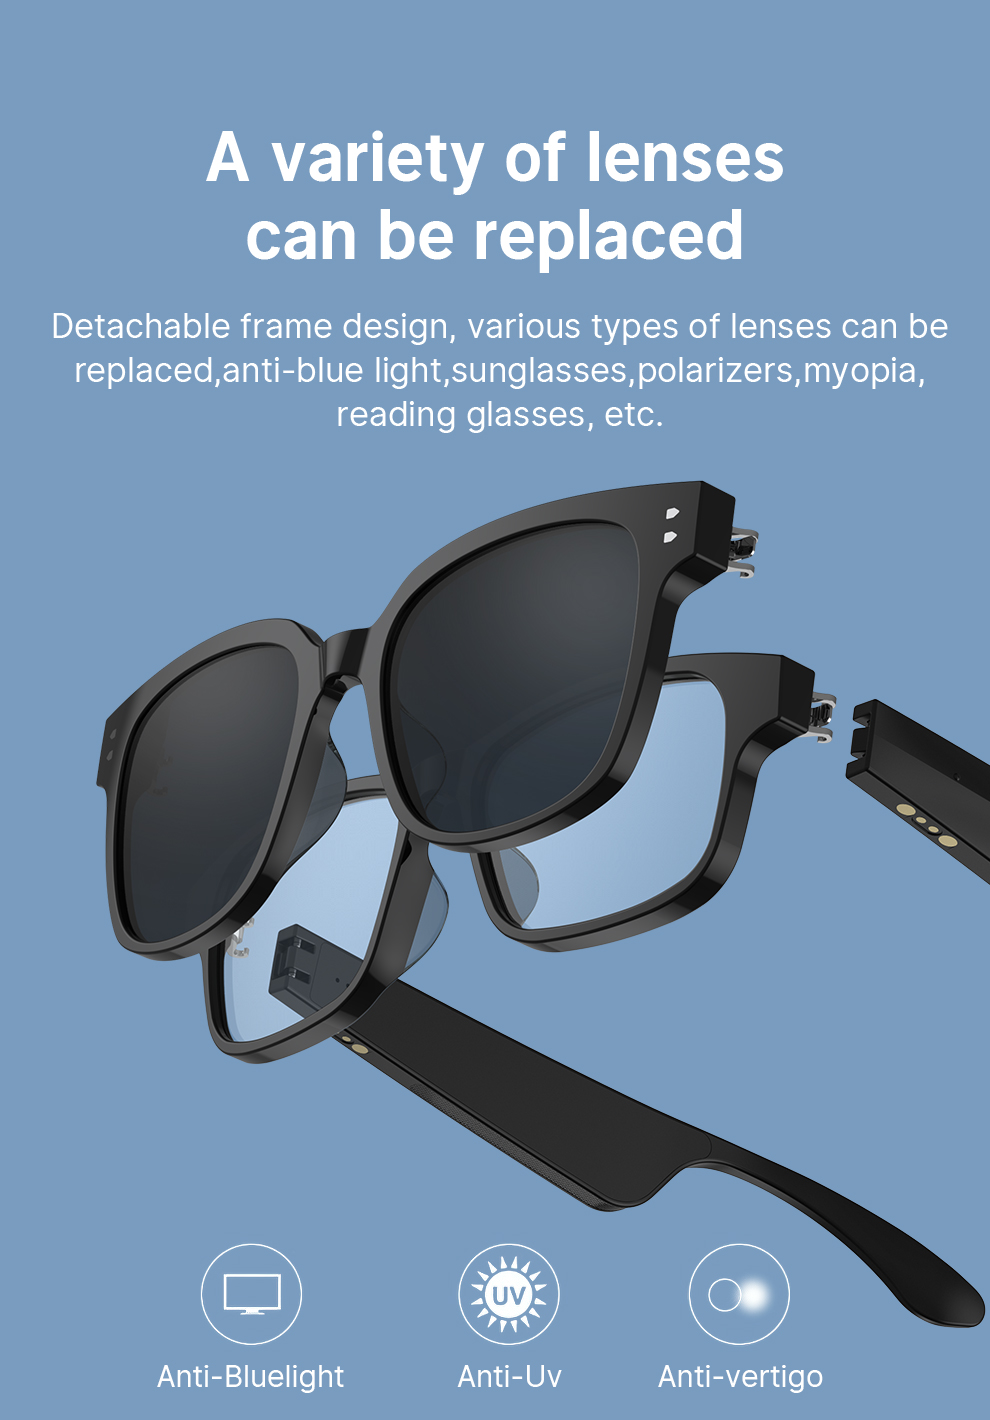 T2S-1 Smart Audio Bluetooth Glasses - Buy Polarizing Blue Light ...